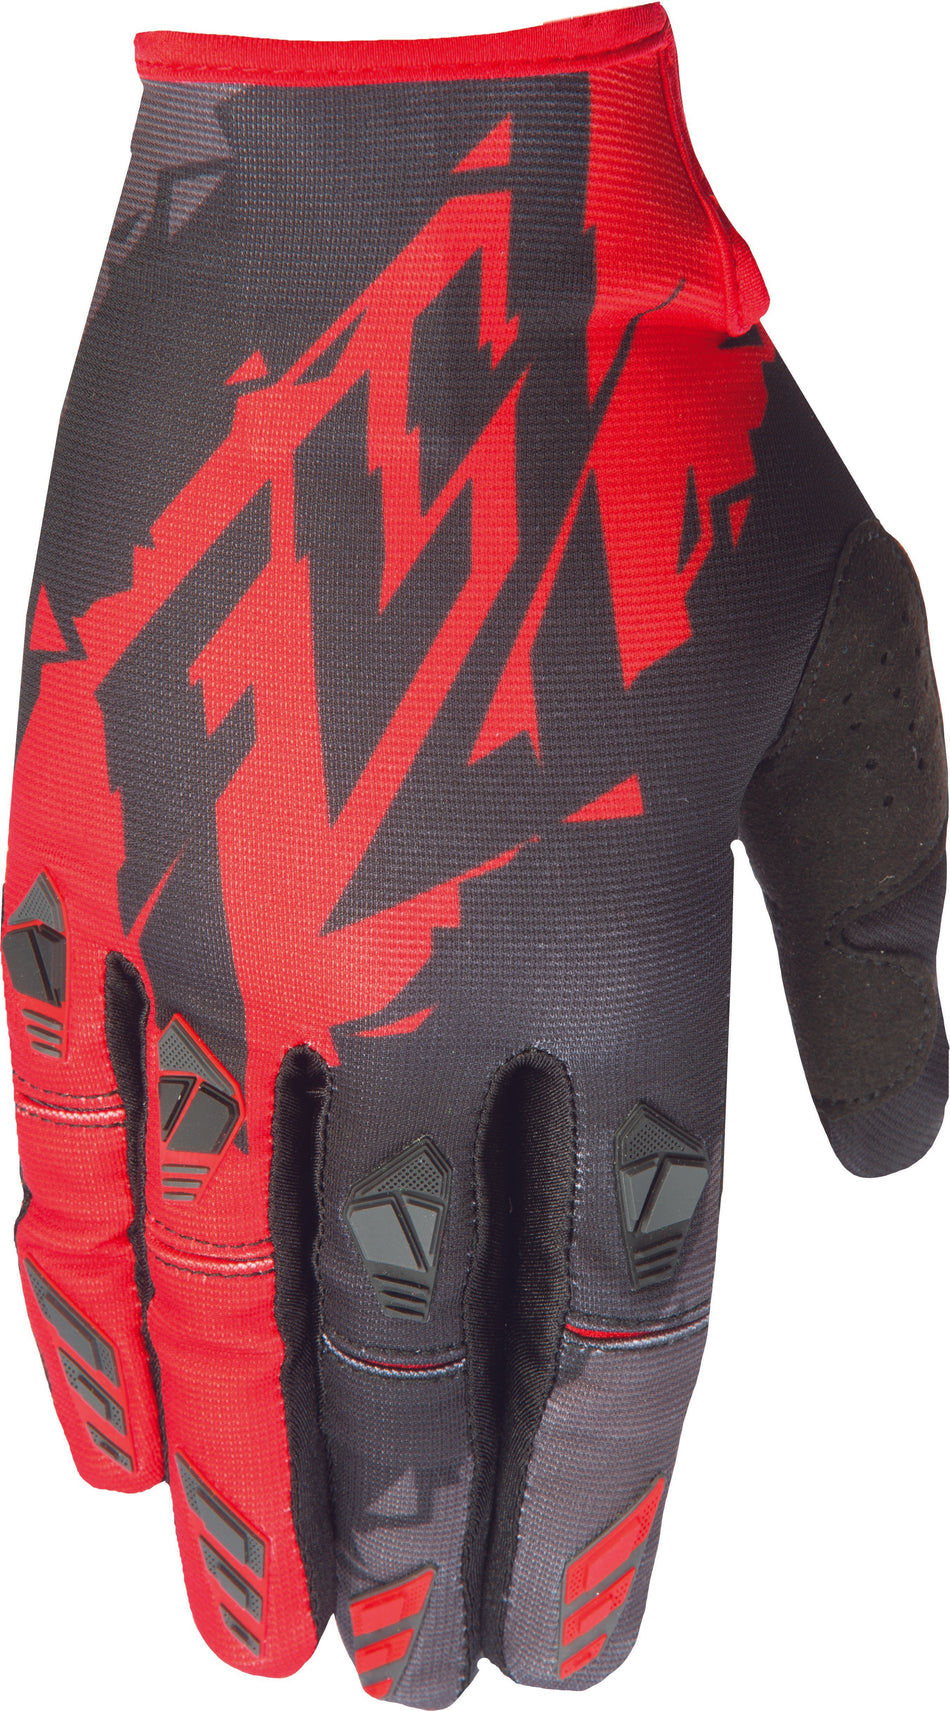 FLY RACING Kinetic Glove Black/Red Sz 9 M 370-41209